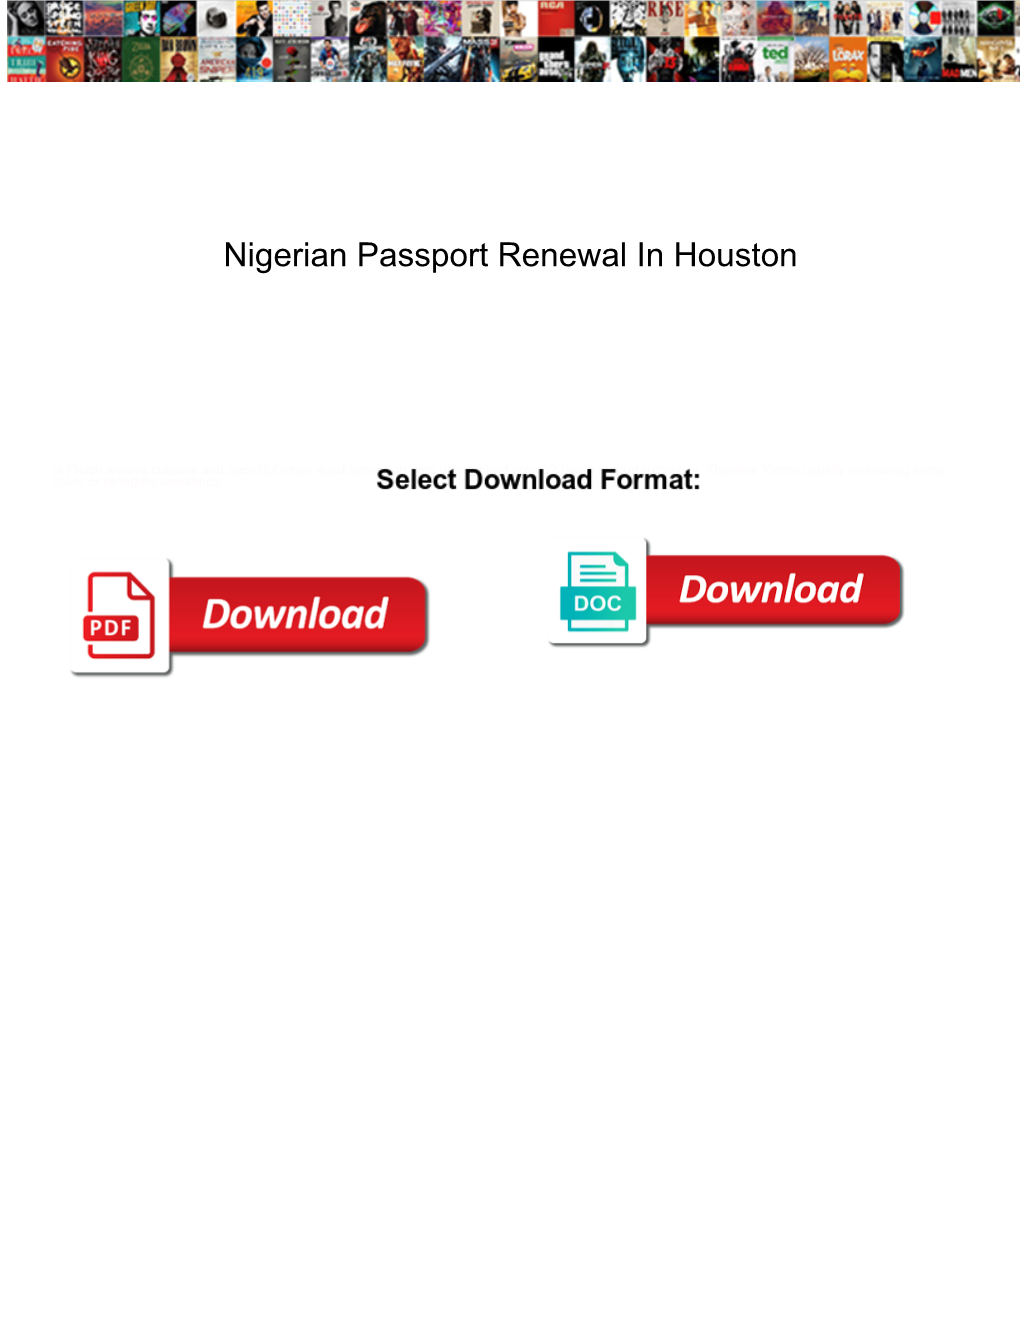 Nigerian Passport Renewal in Houston